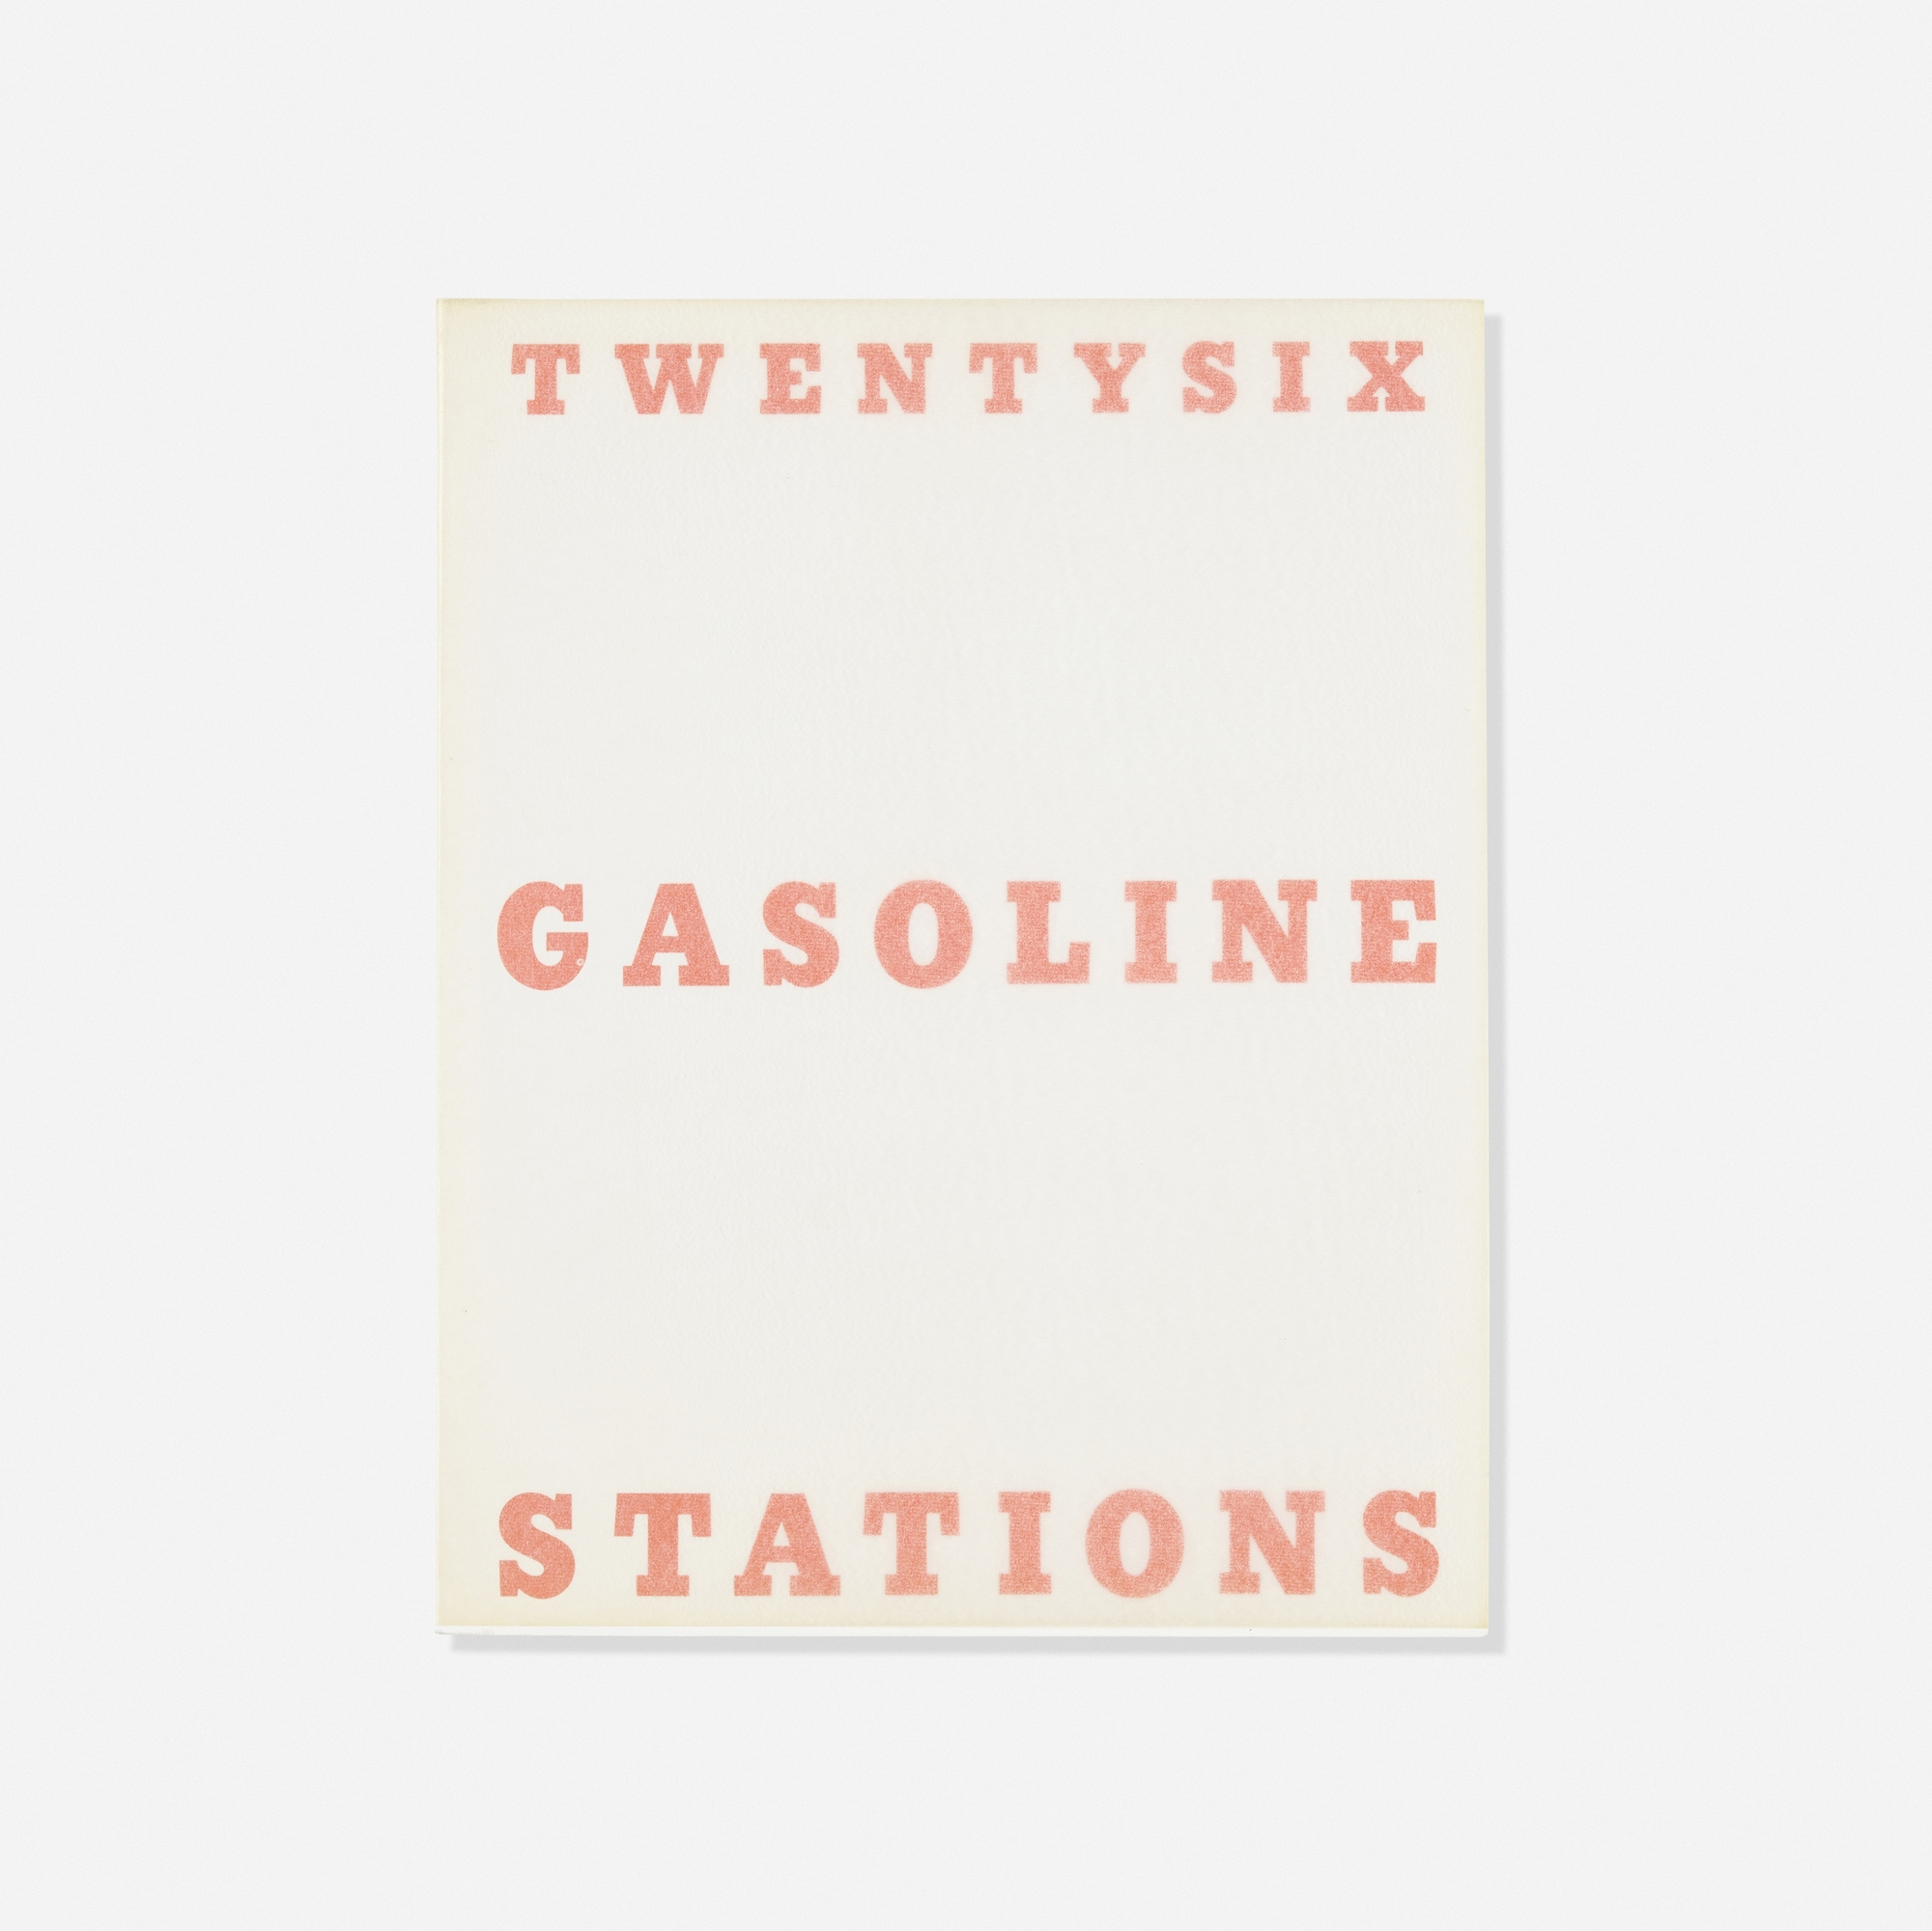 Twentysix Gasoline Stations by Ed Ruscha, 1963 / 1969